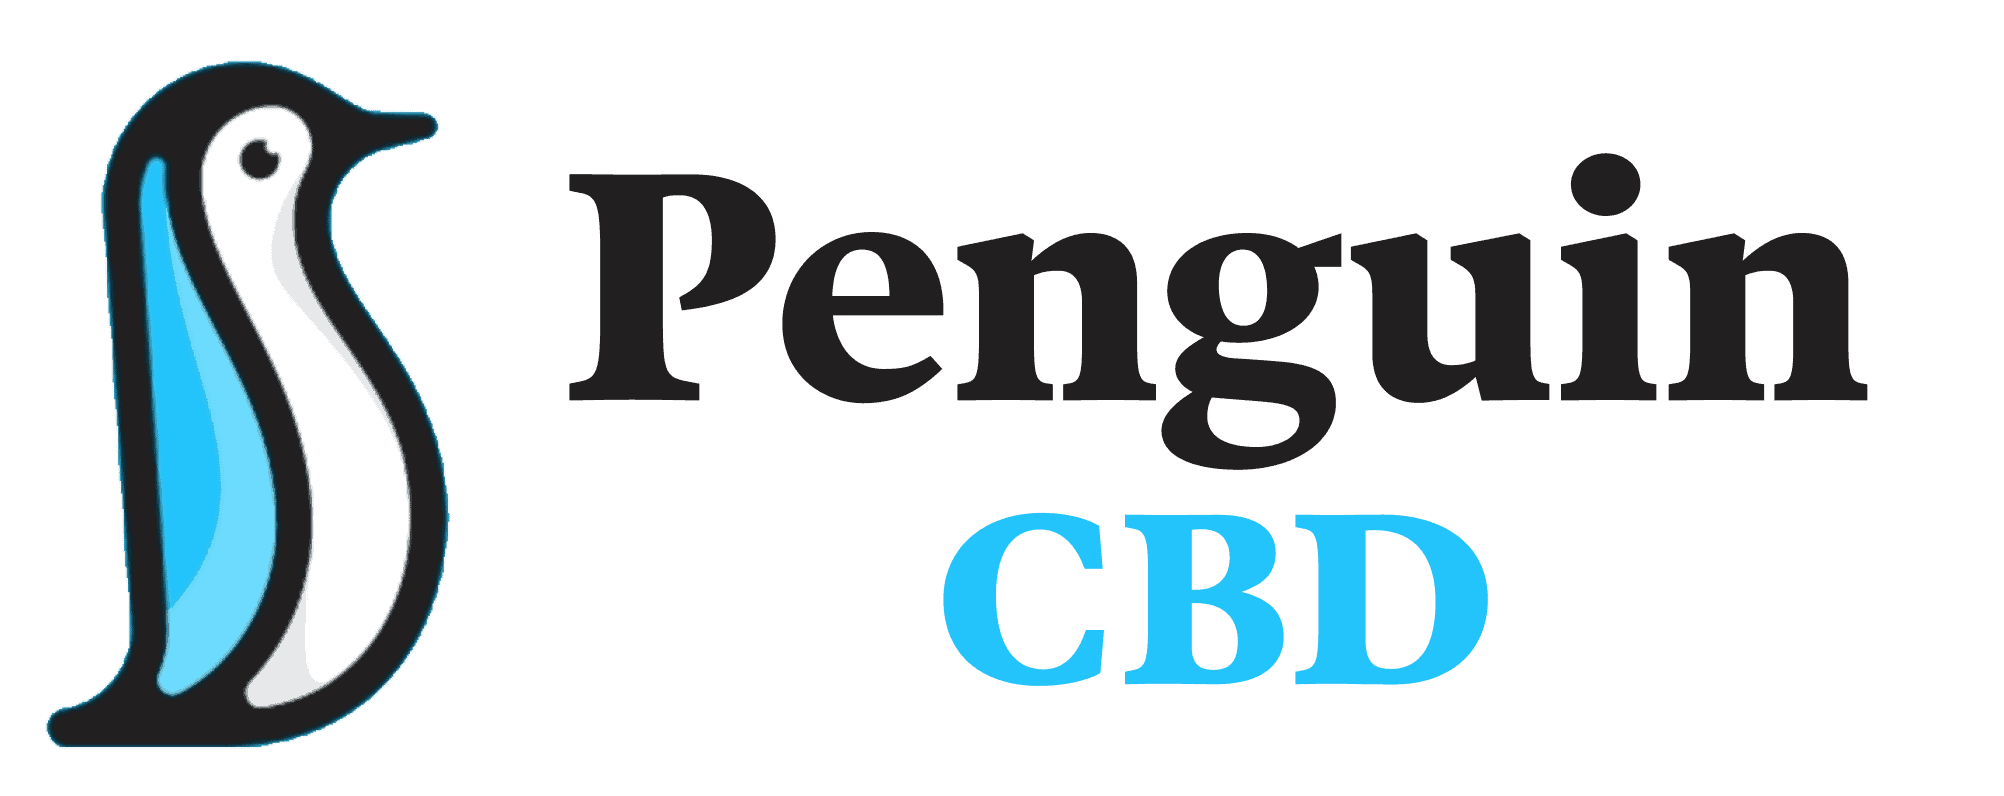 Penguin-CBD.png